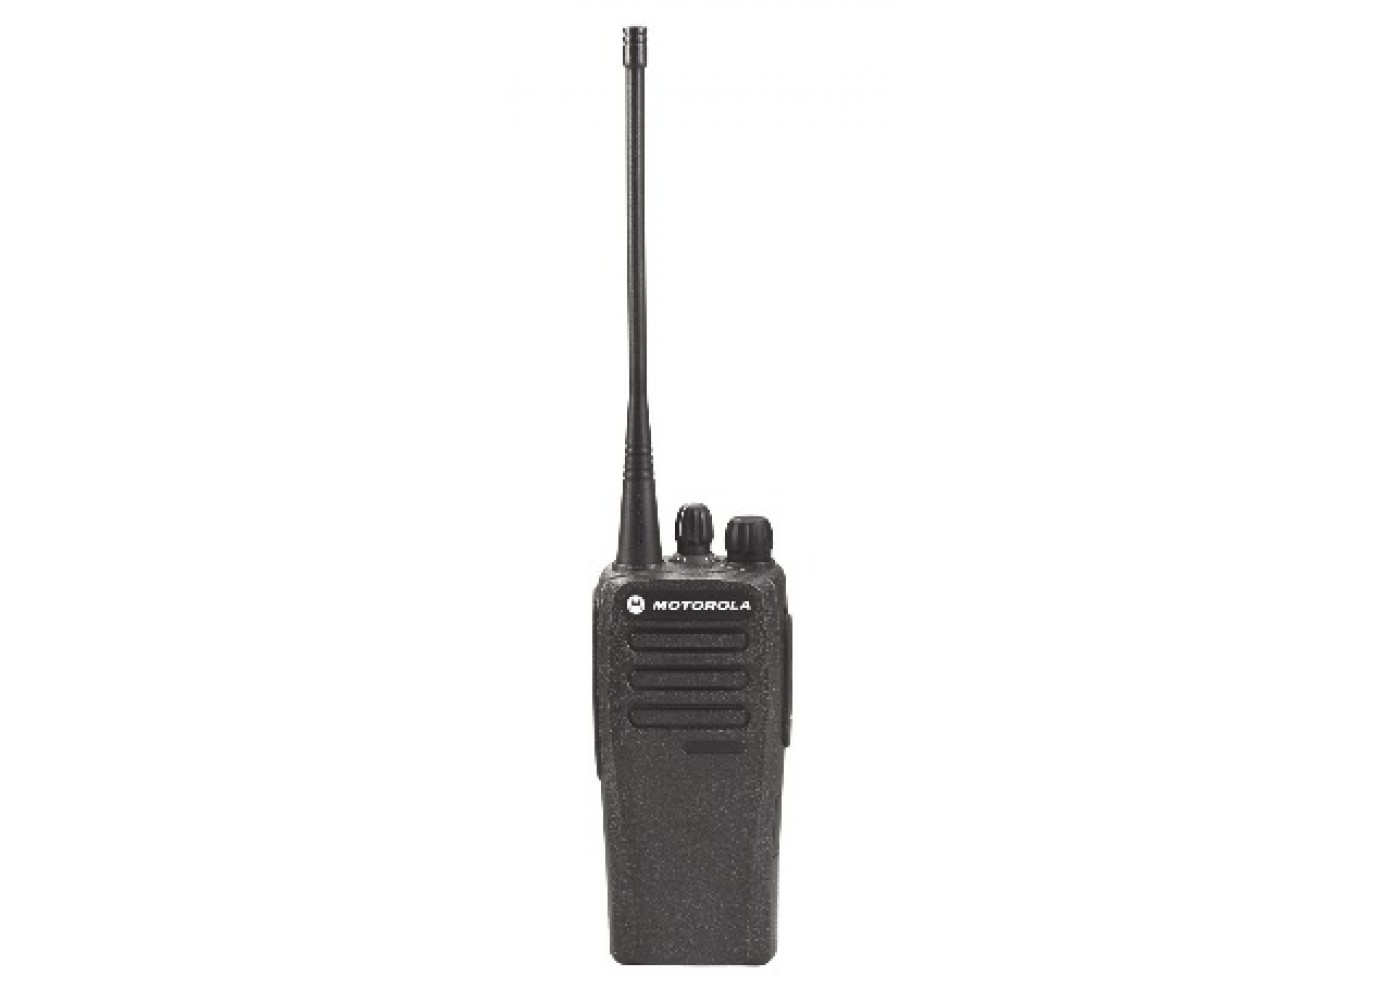 Motorola Original CP200 AAH50KDC9AA1AN Handheld VHF Transceiver 146-174 MHz 5 Watts 4 Channels